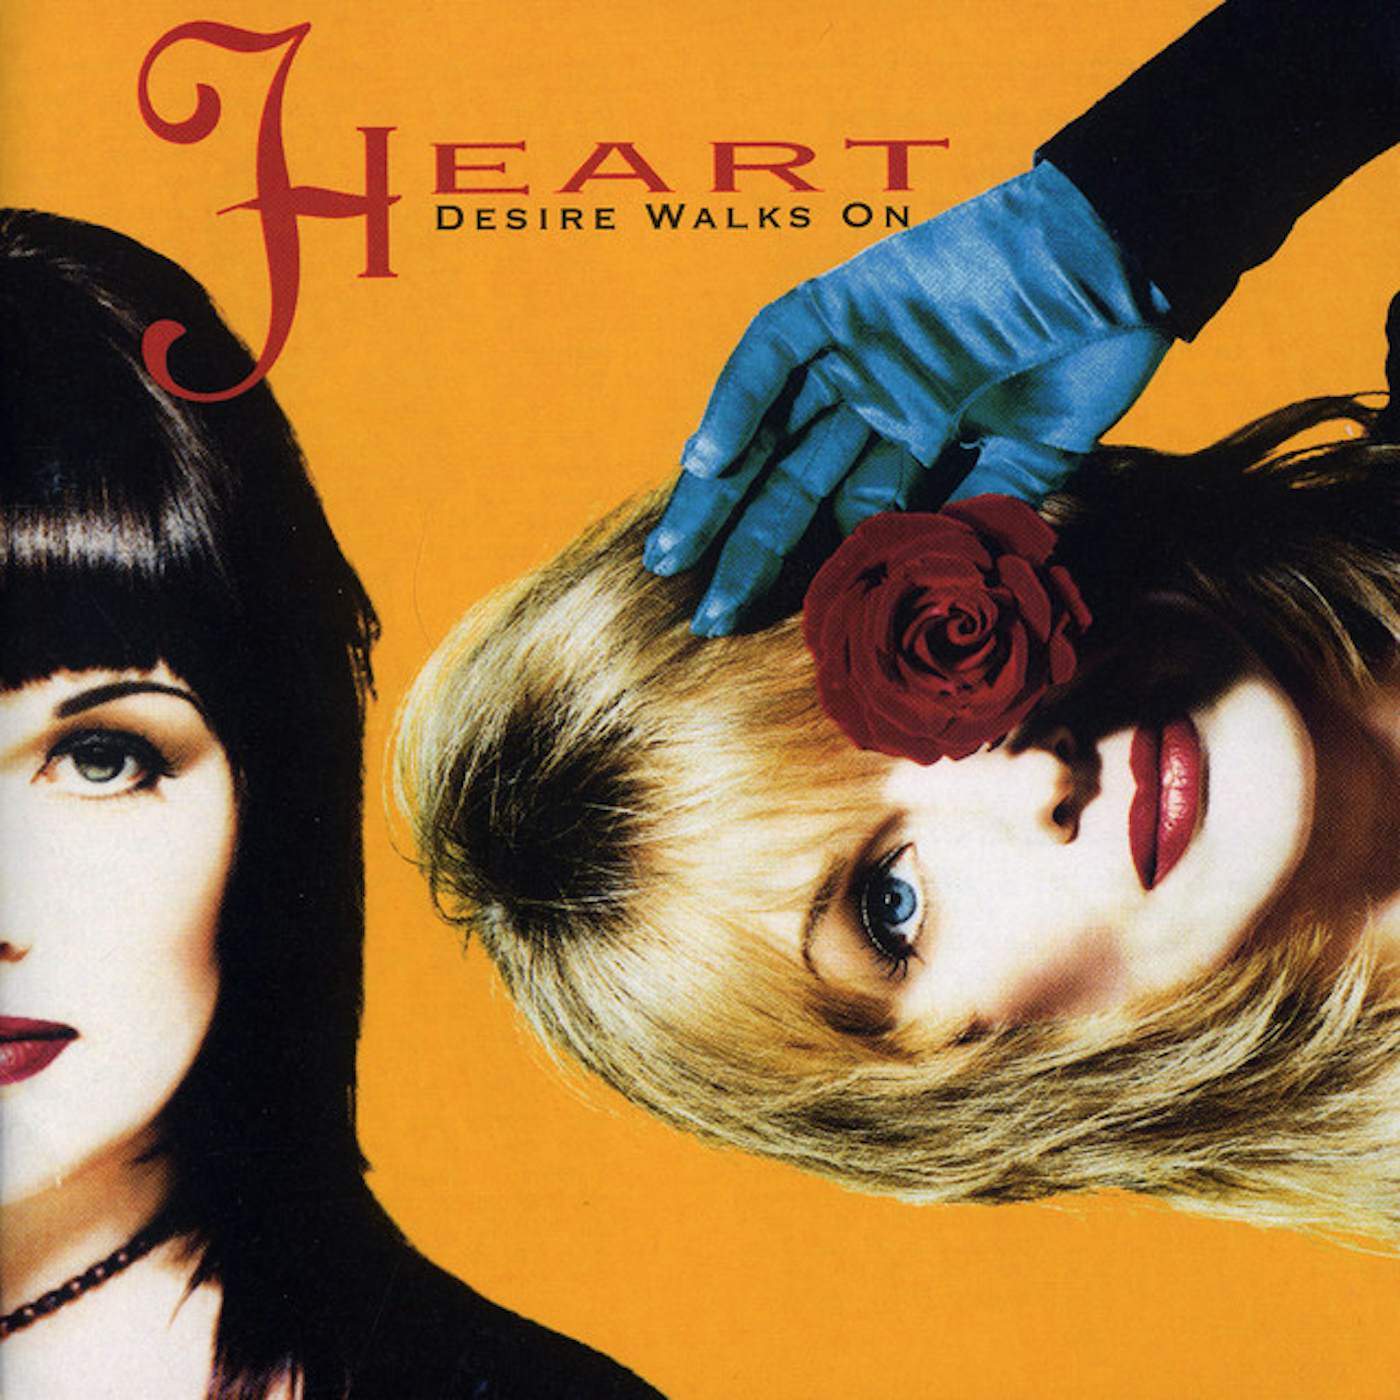 Heart DESIRE WALKS ON CD